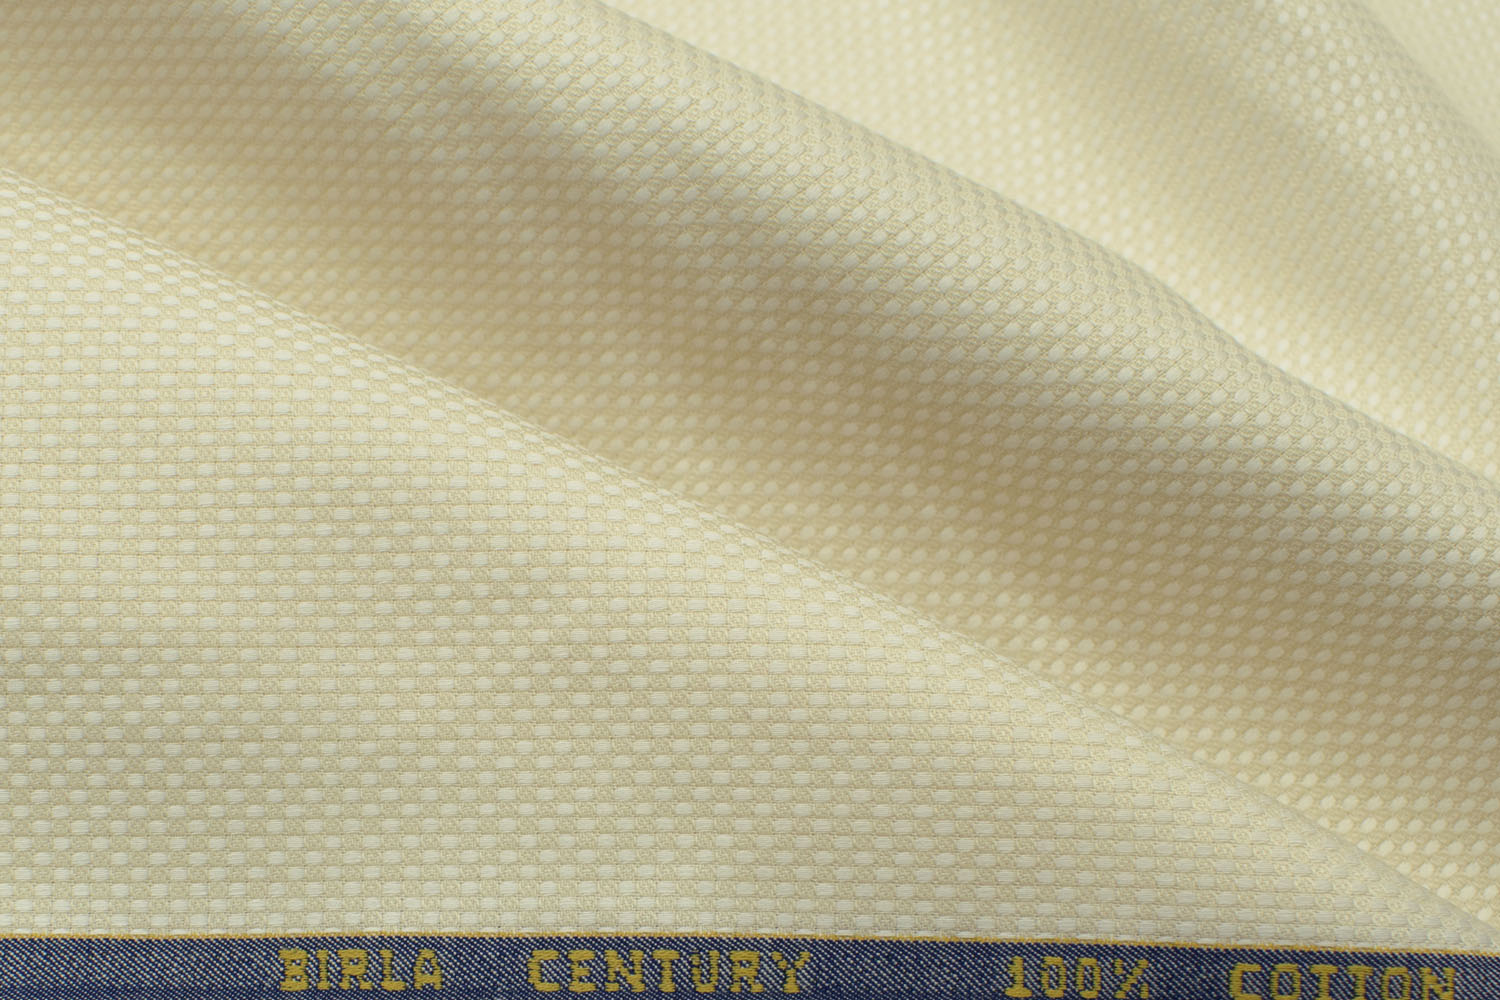 Birla Century Men's Cotton Solids 2.25 Meter Unstitched Shirting Fabric (Cream )